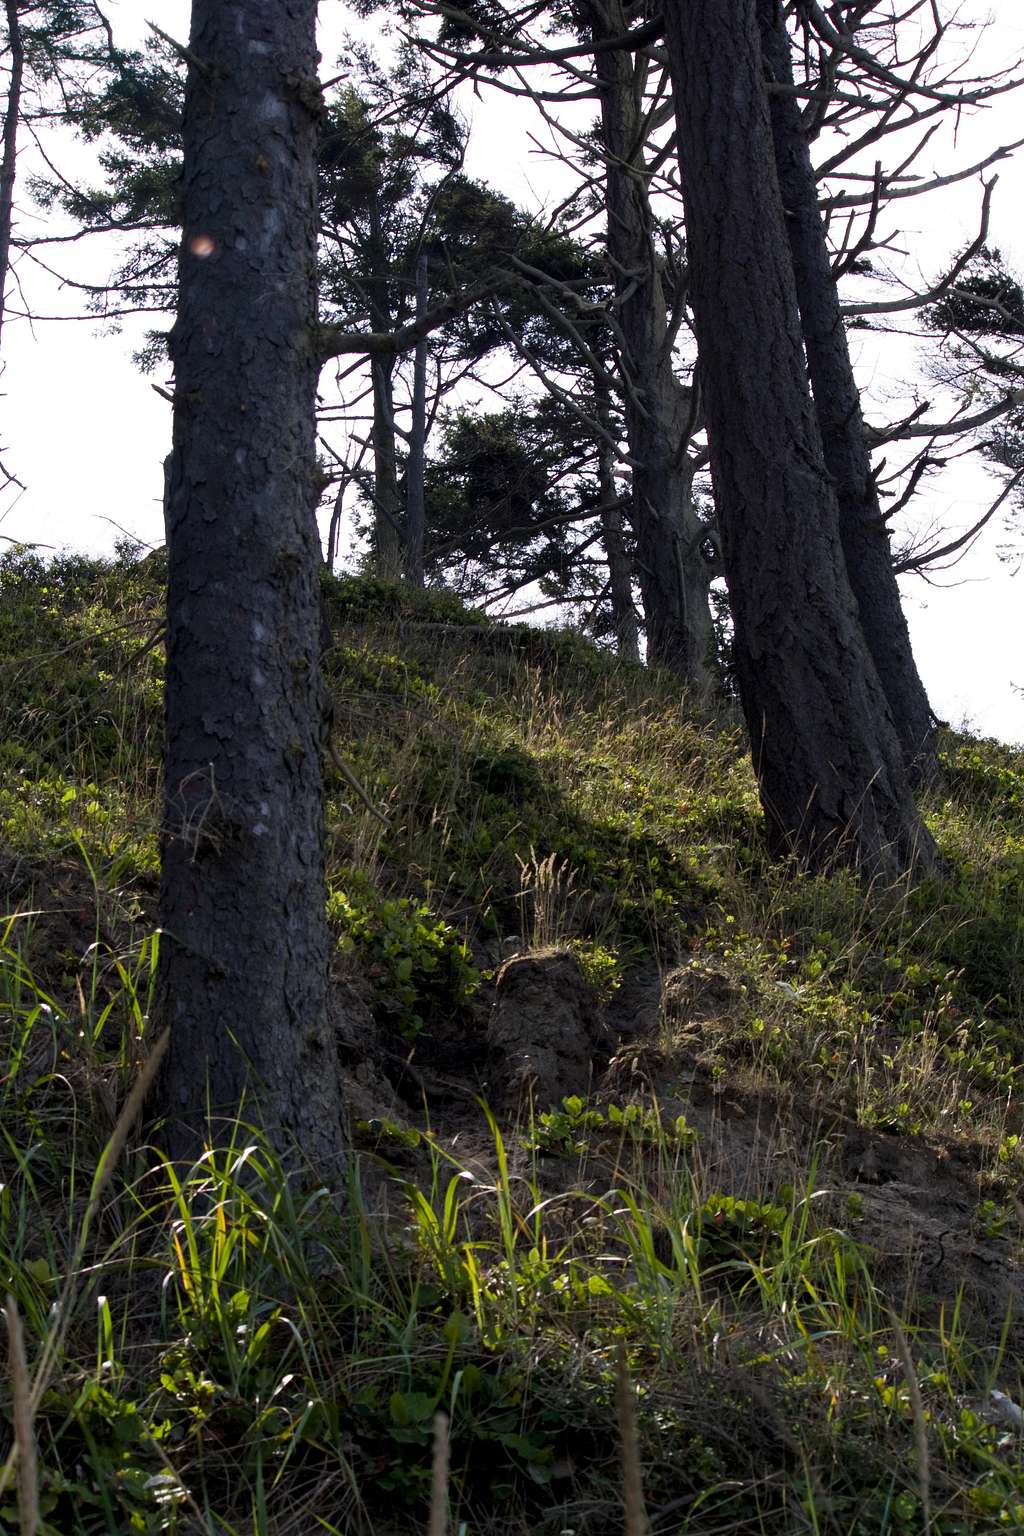 Steep hillsides are prone to erosion